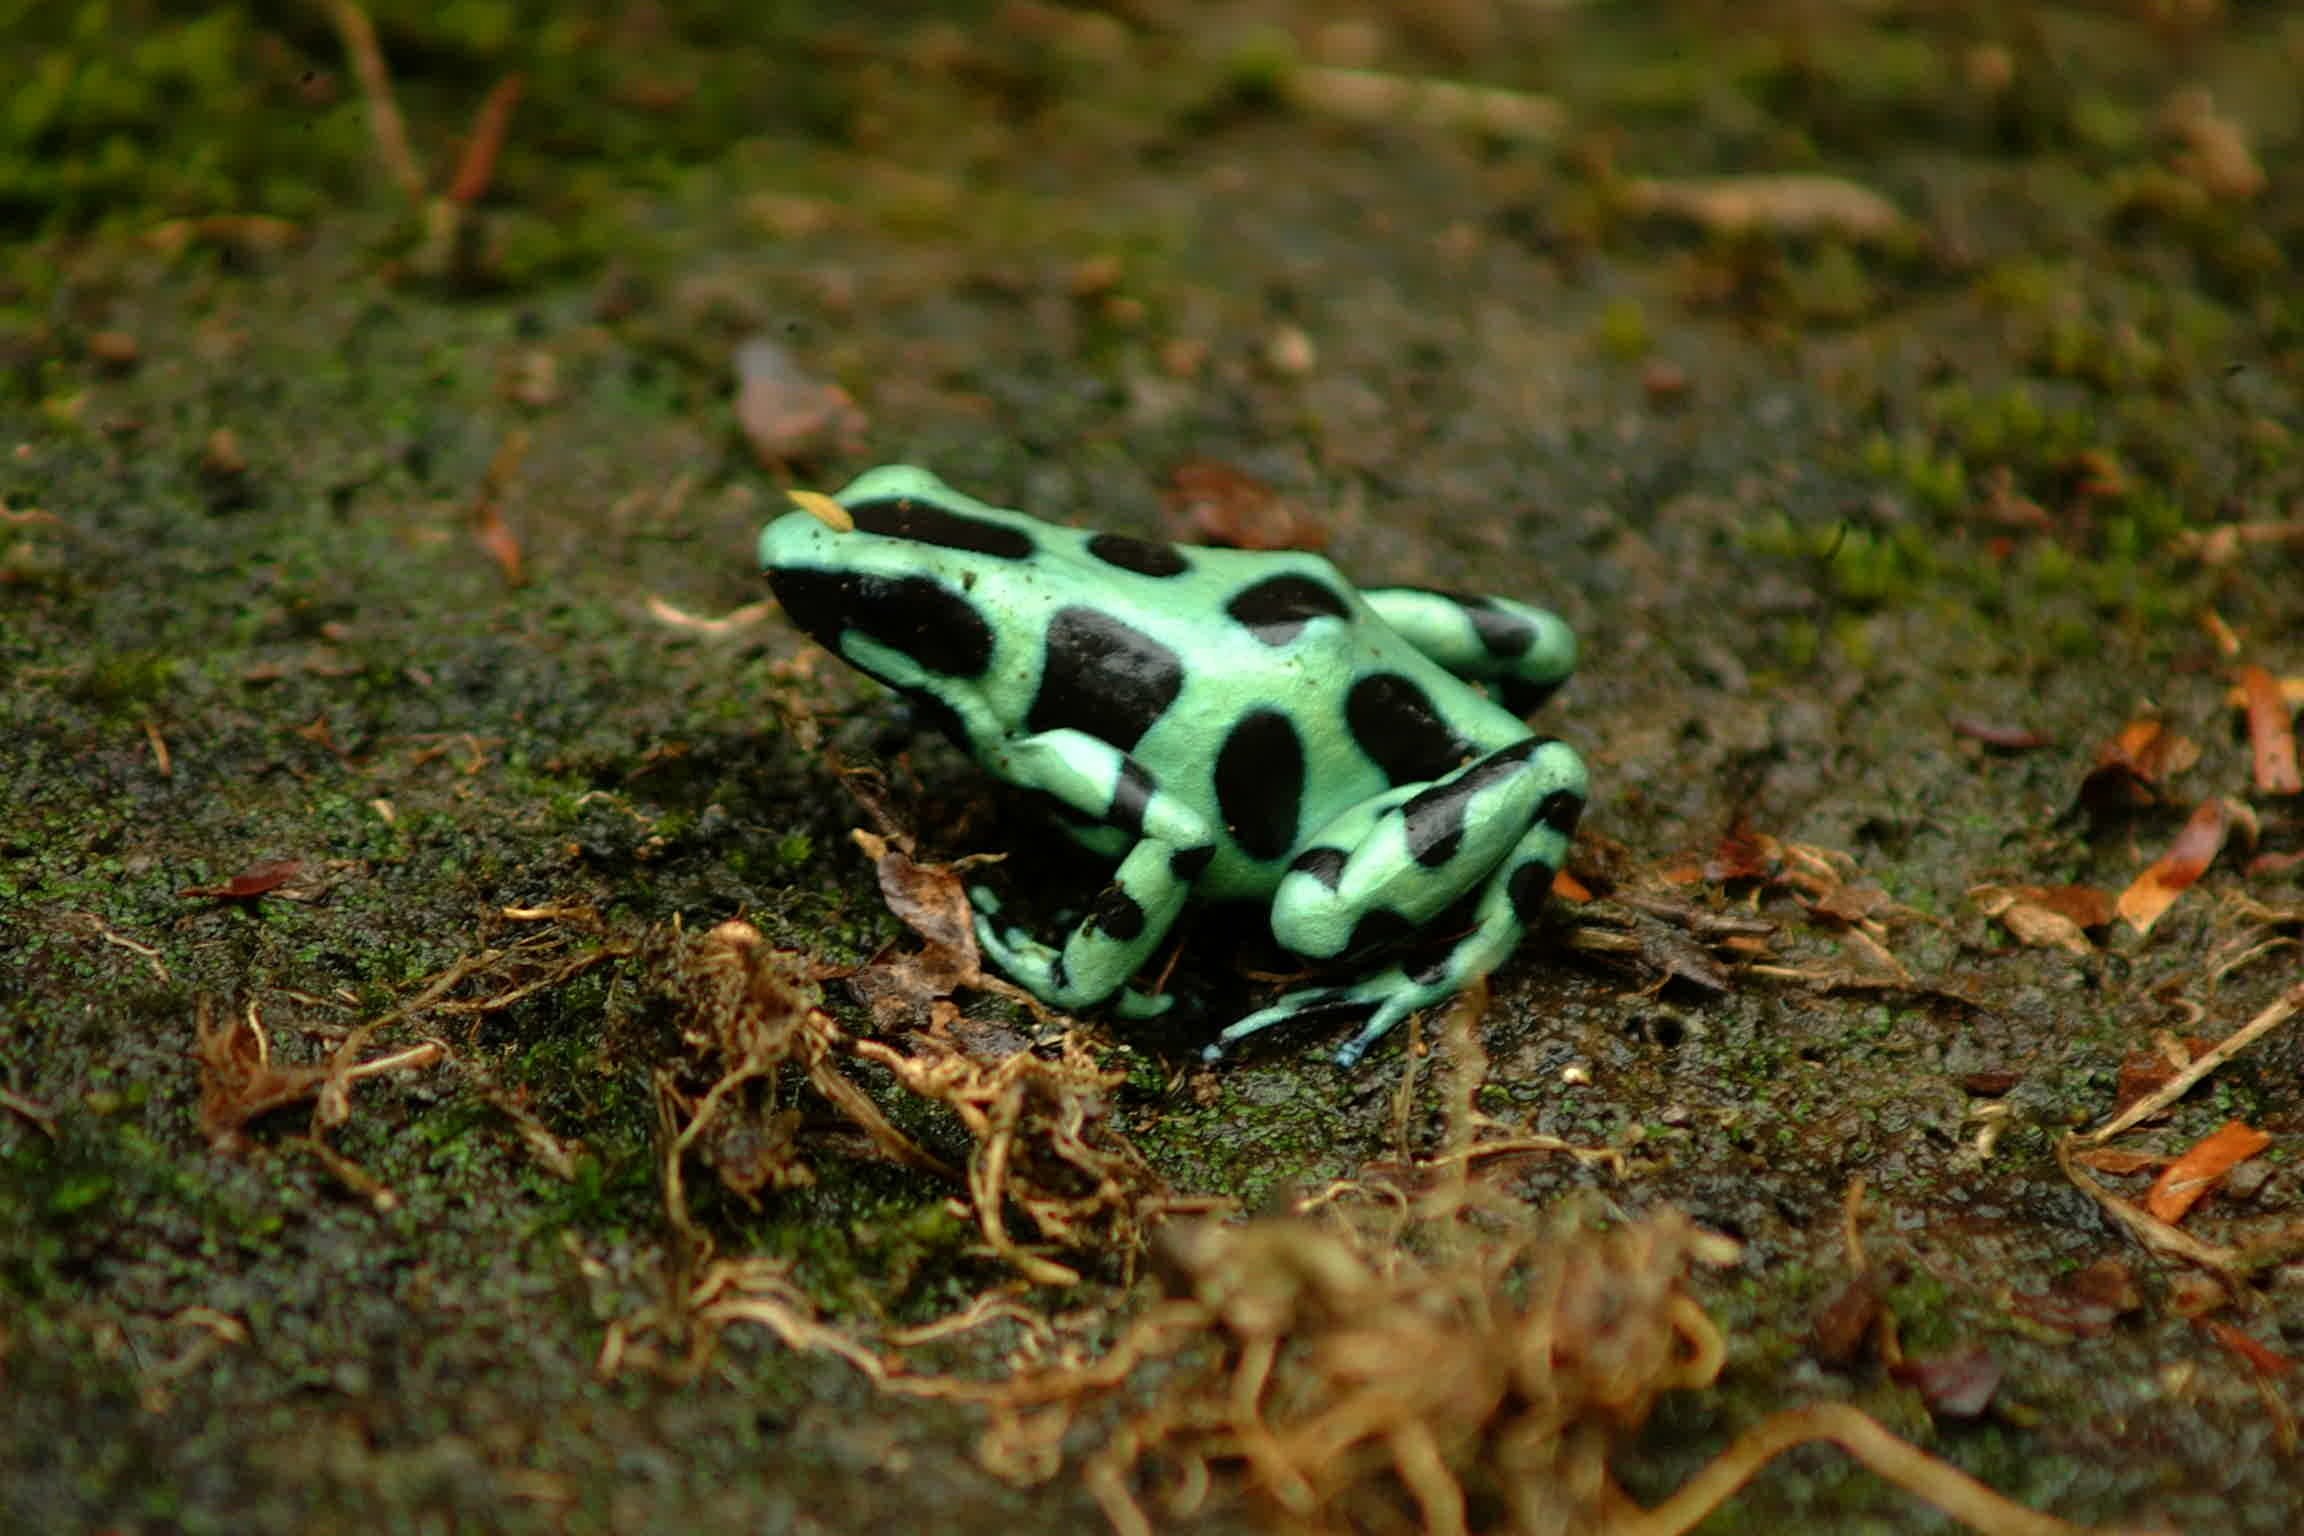 Elephant frog. Североамериканская древесная лягушка. Шипастоголовая древесная лягушка.. Лягушка микроквакша. Земляная жаба.